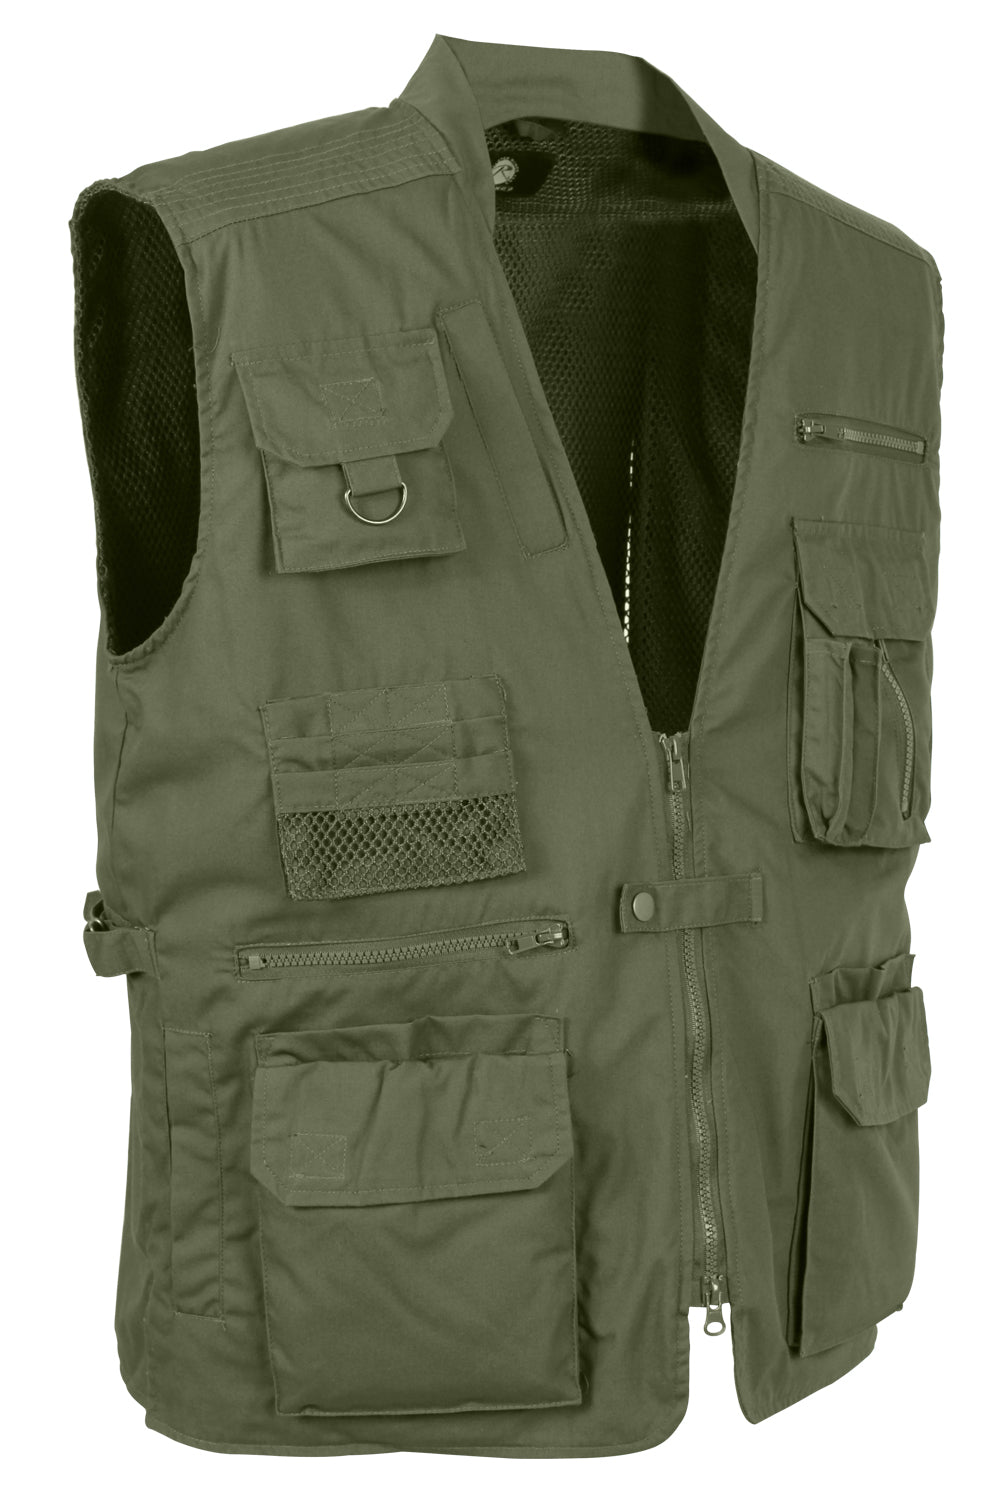 Plain Clothes Concealed Carry Tactical Cargo Vest - Black Khaki or Olive